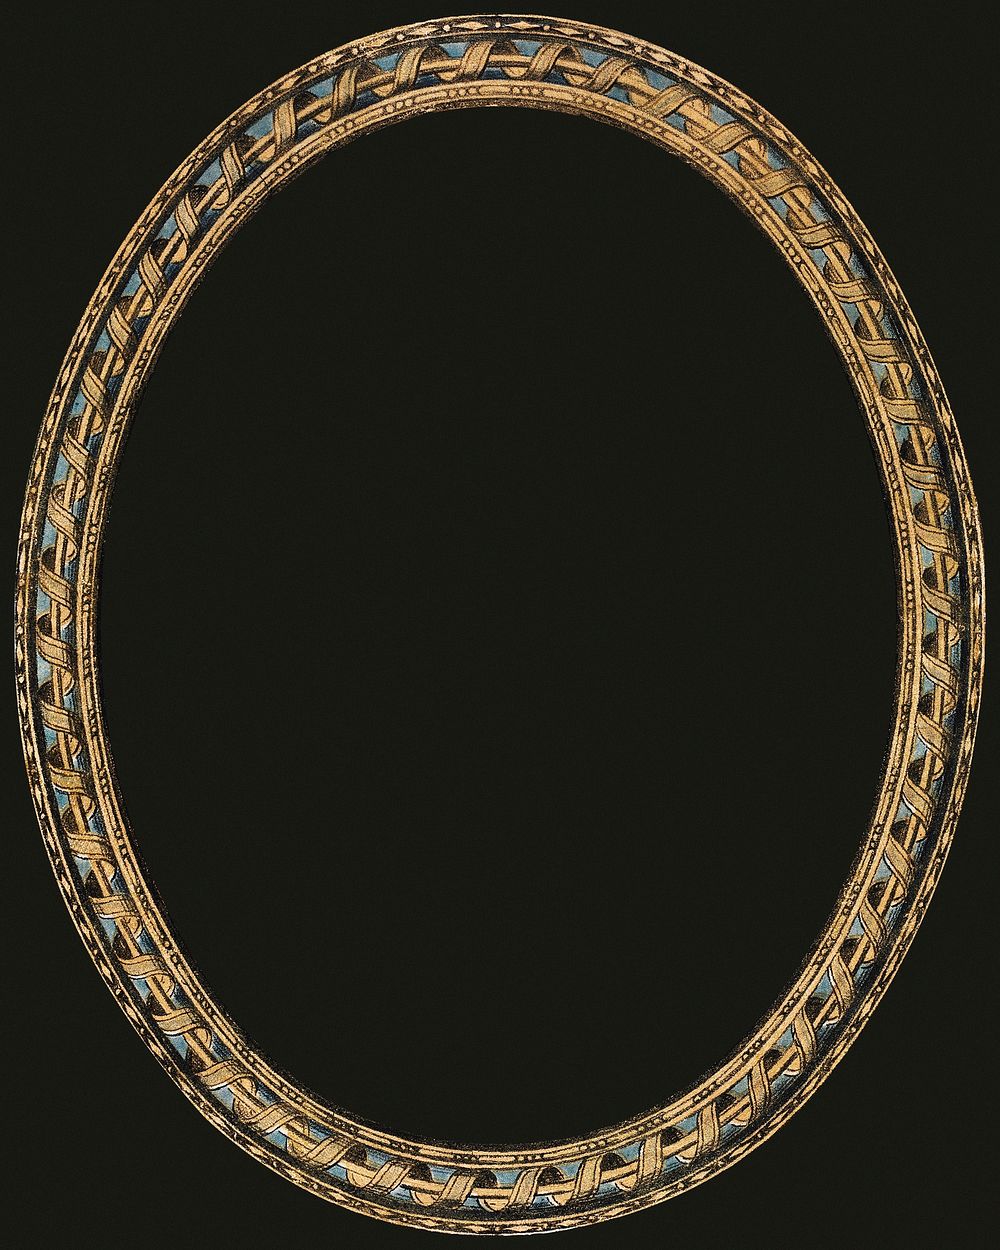 Vintage gold oval frame, featuring public domain artworks